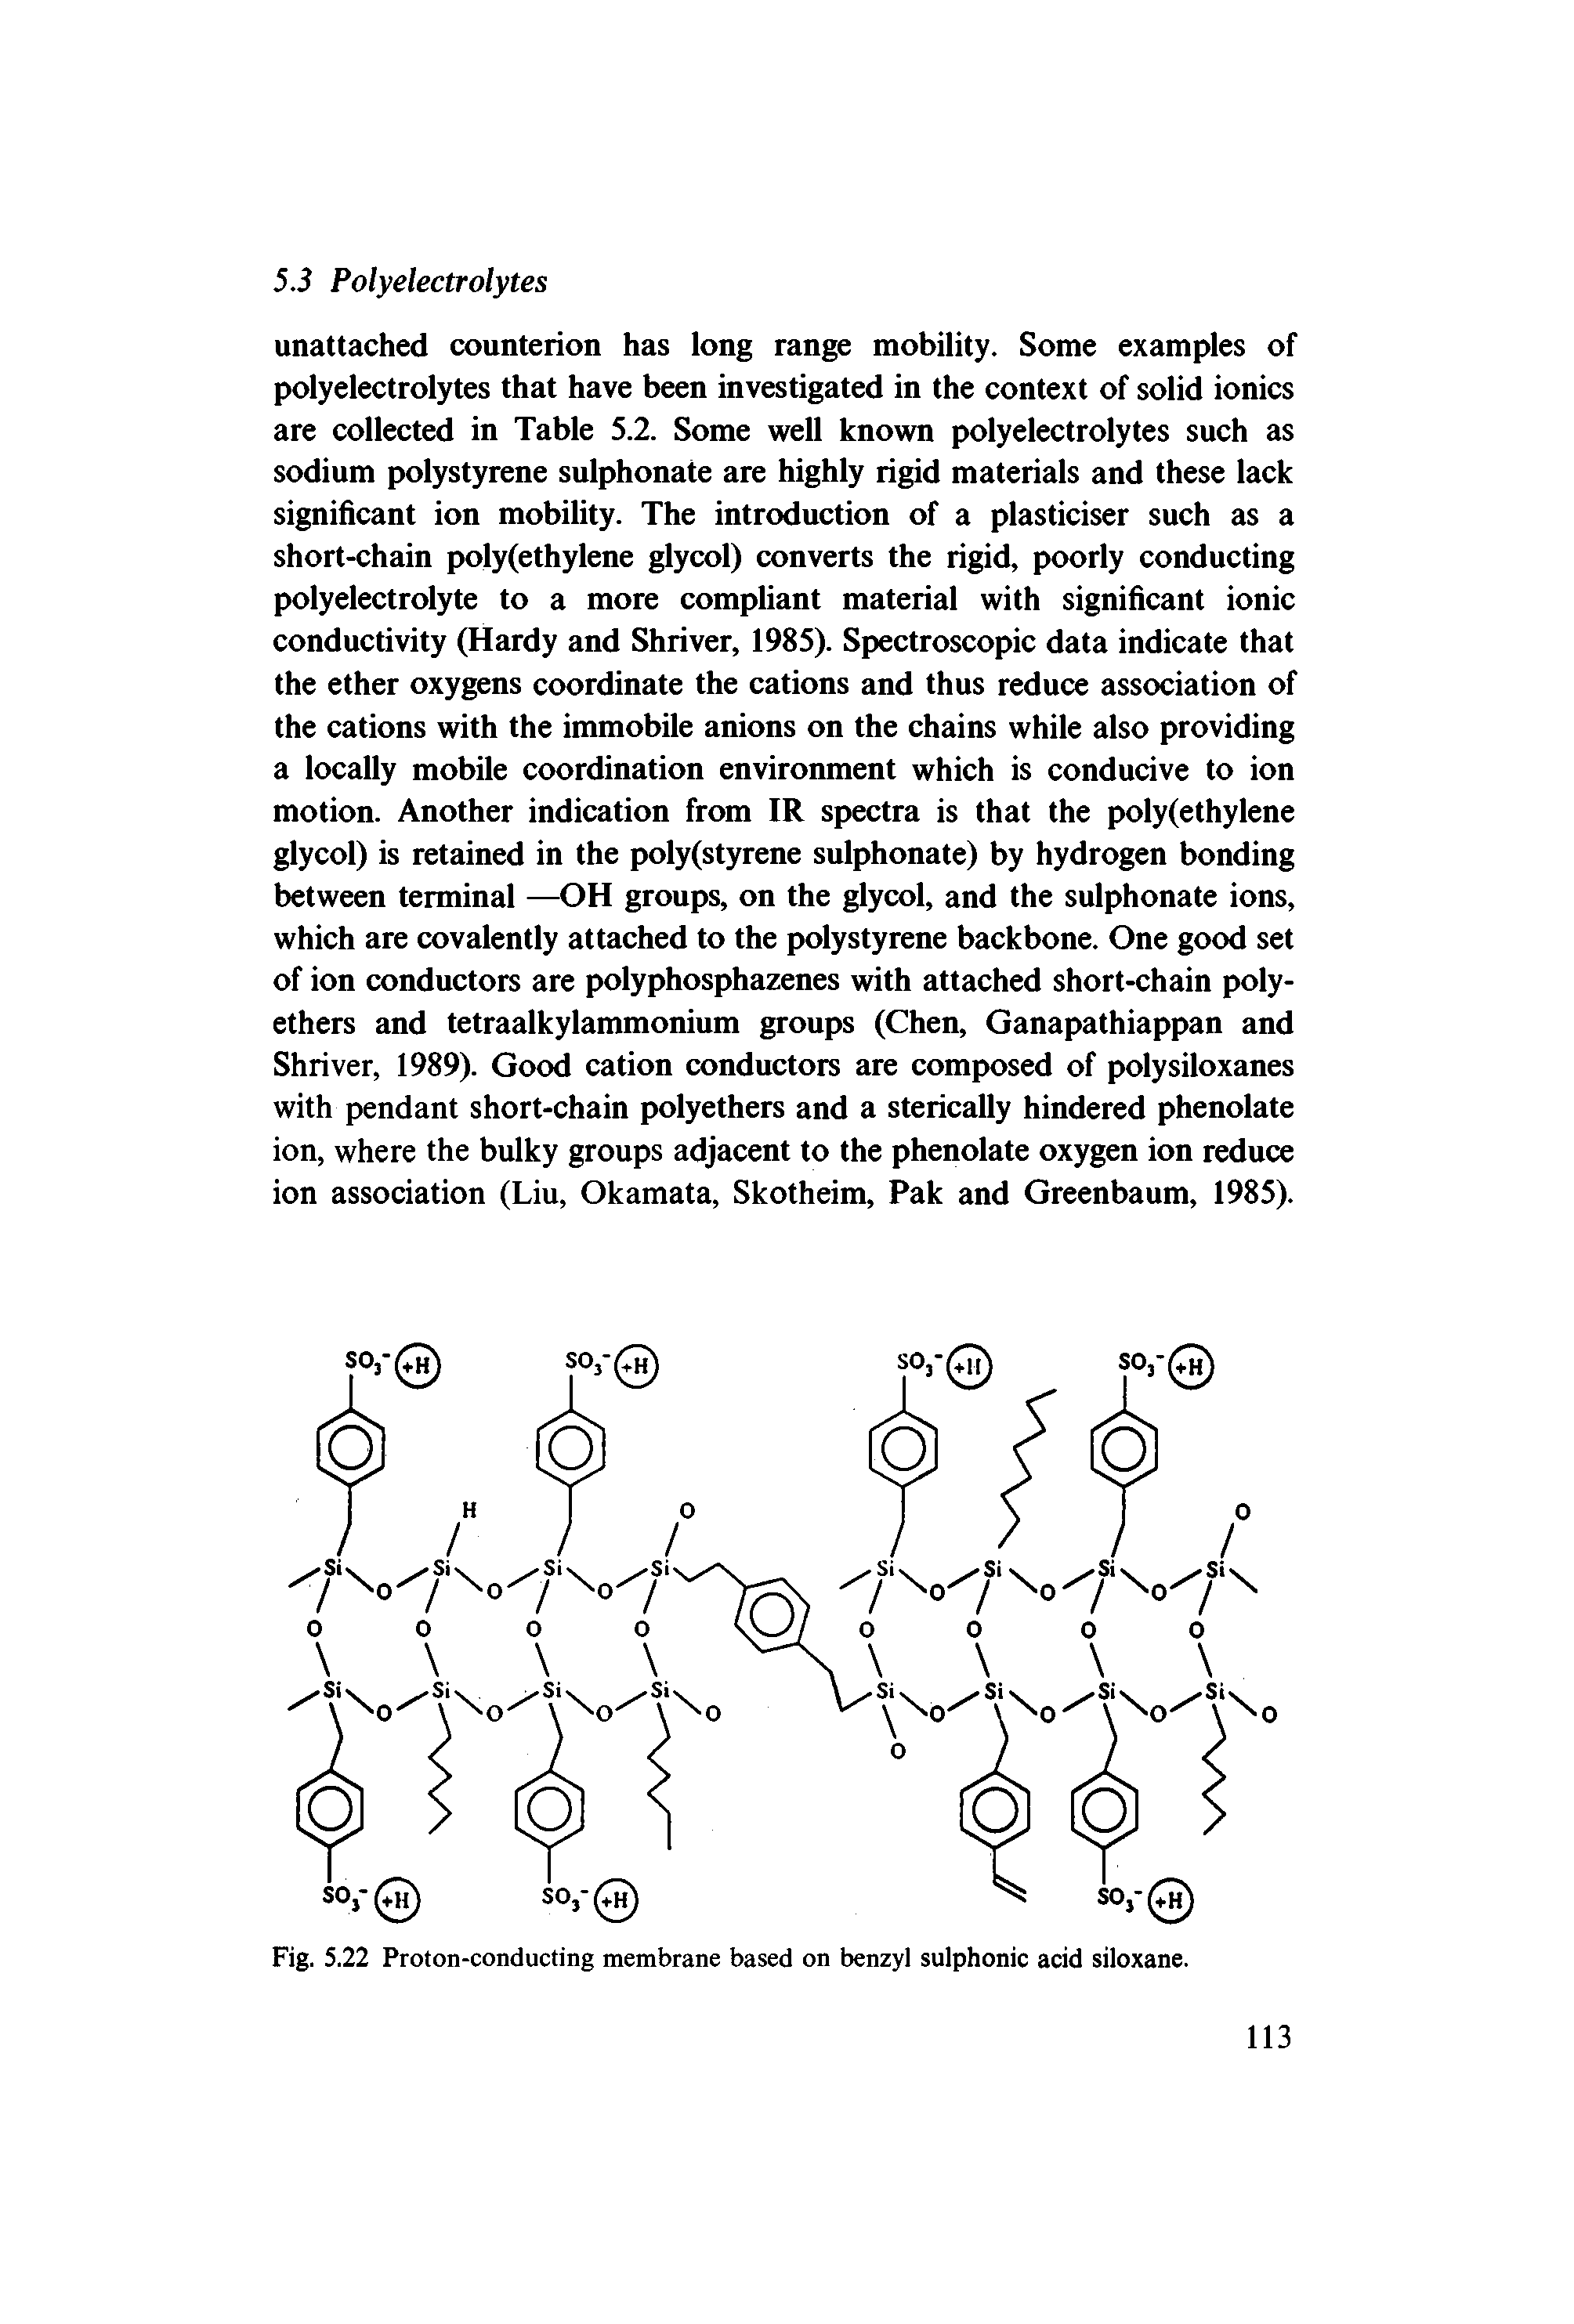 Fig. 5.22 Proton-conducting membrane based on benzyl sulphonic acid siloxane.